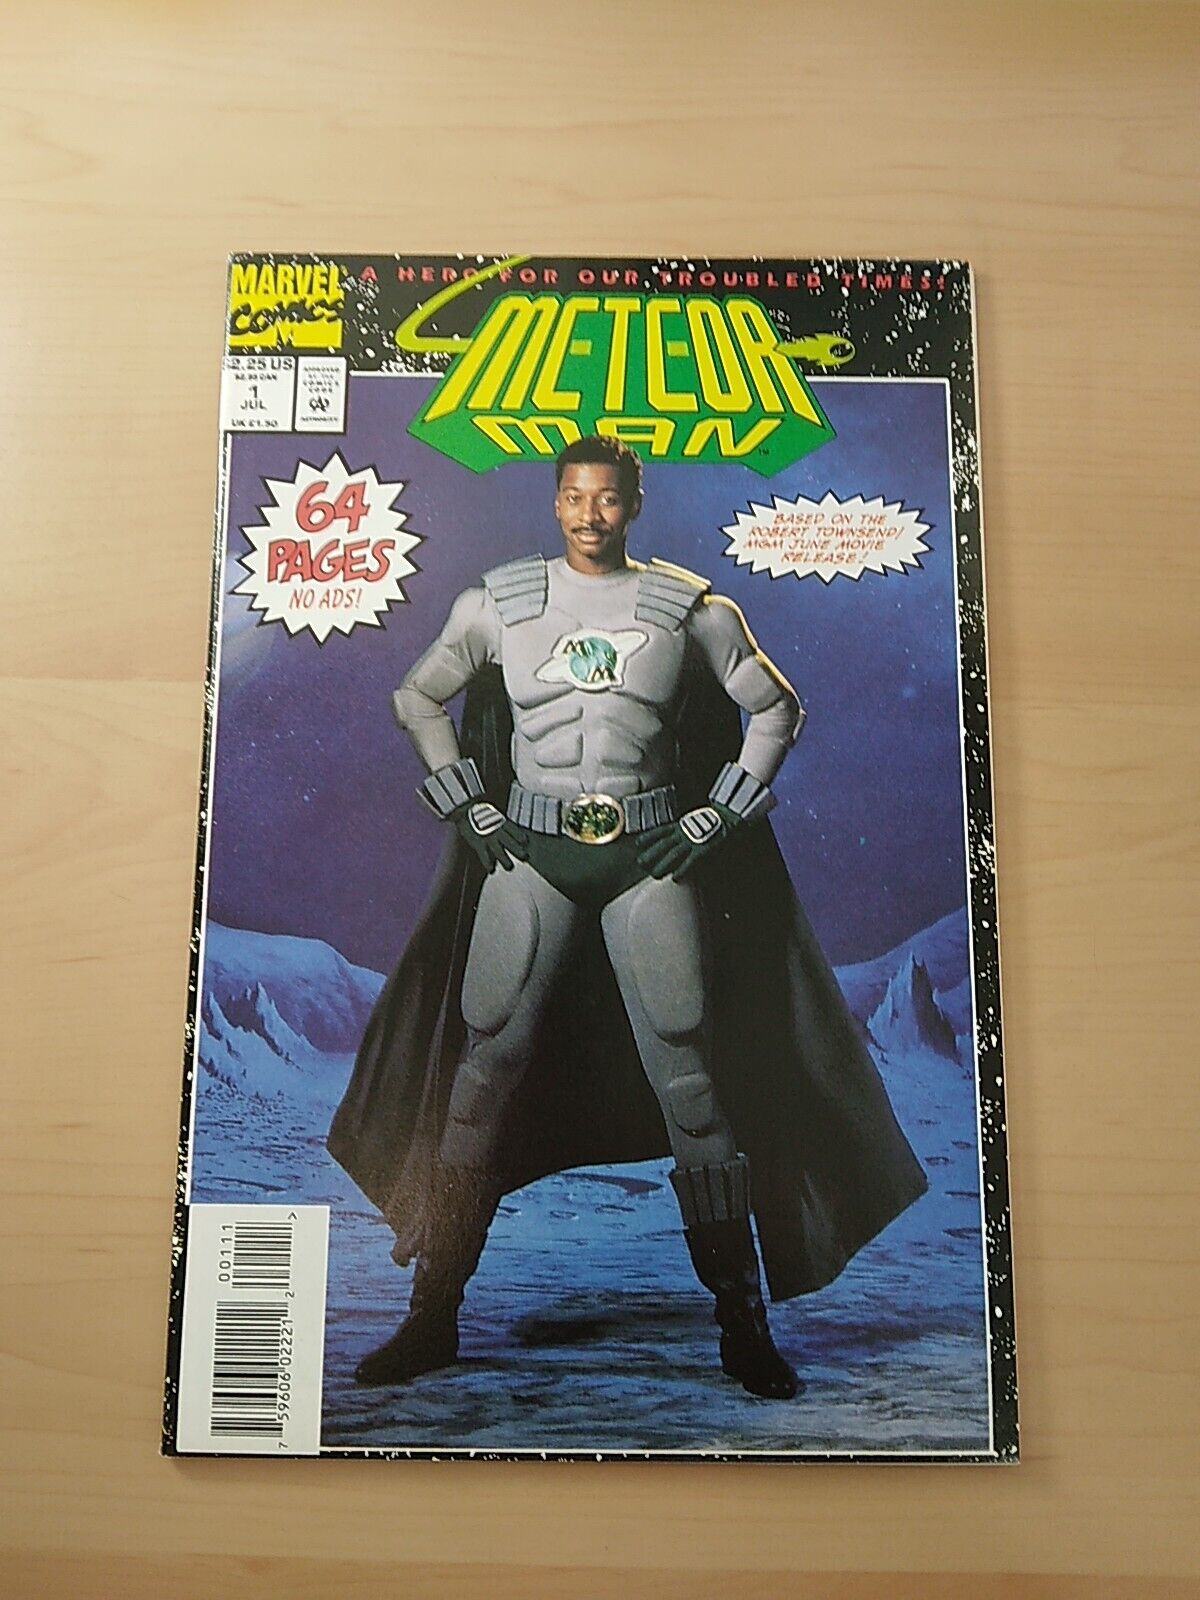 METEOR MAN #1 (MARVEL 1993) ROBERT TOWNSEND PHOTO COVER - NEWSSTAND F/VF